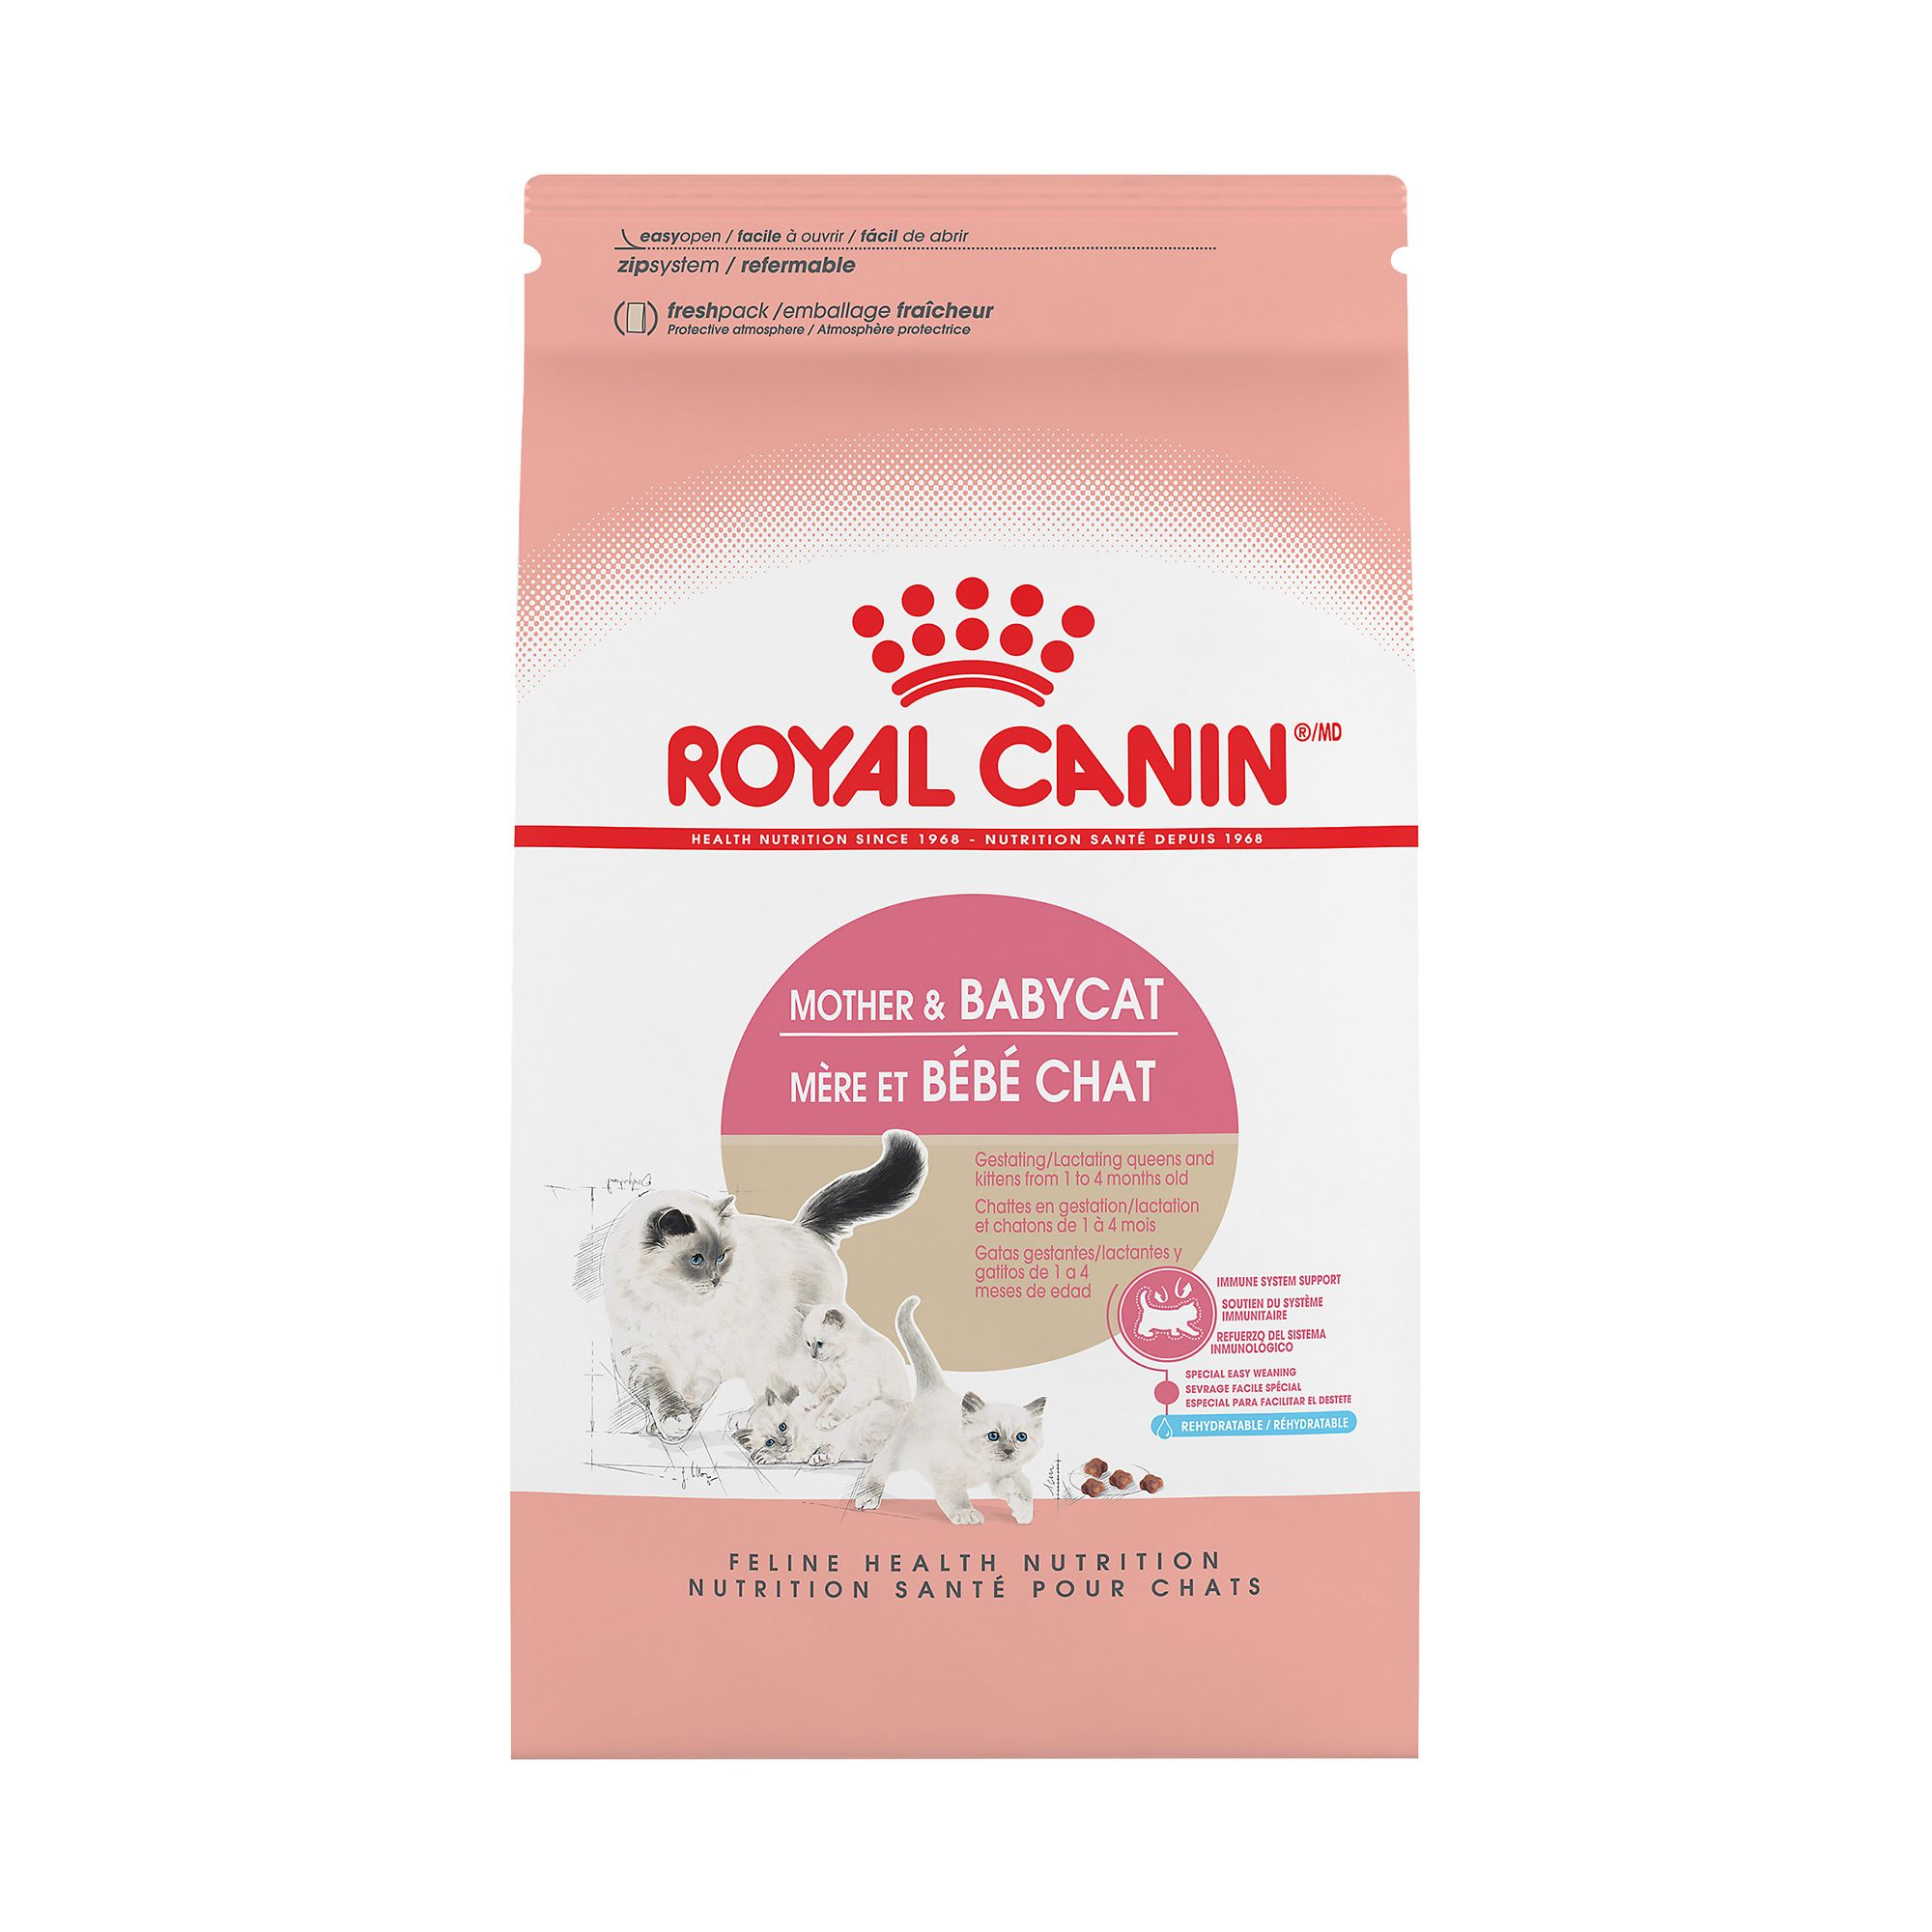 Royal Canin Cat Food Coupons 2020